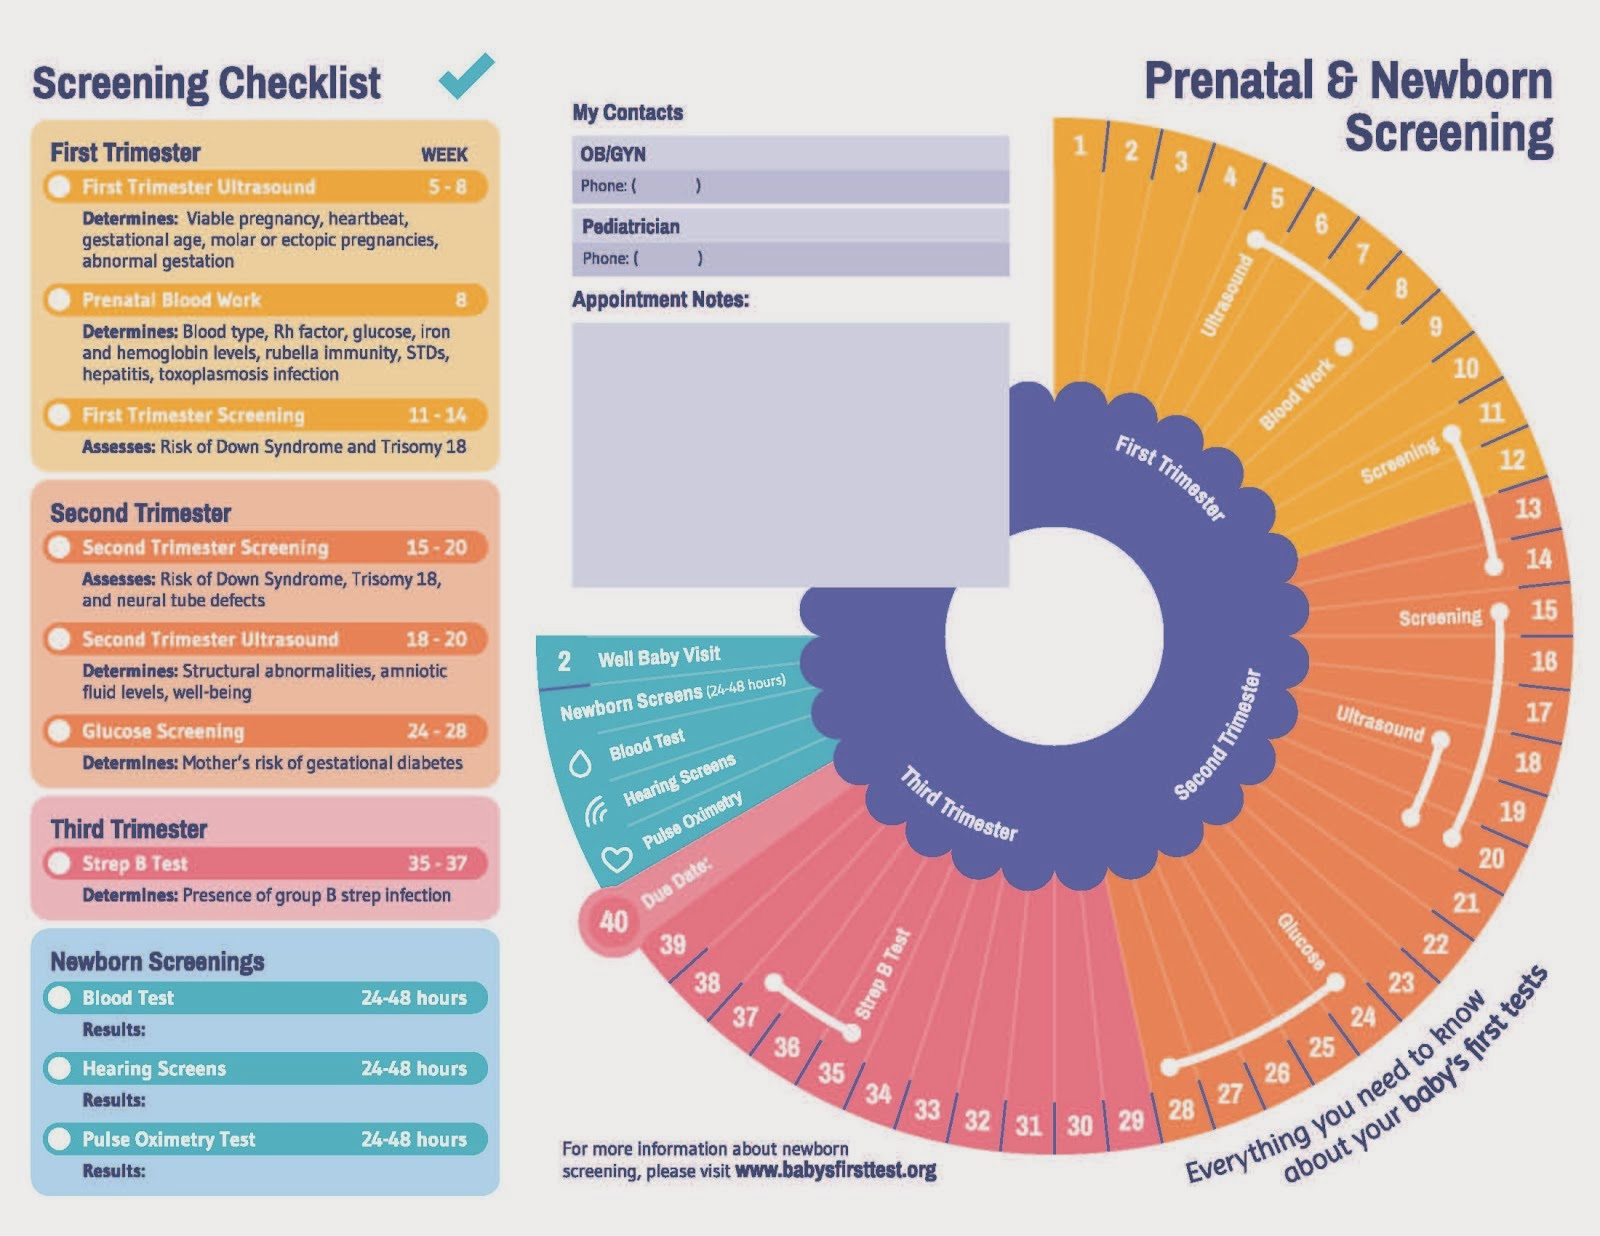 Prenatal and Newborn Screening Timeline